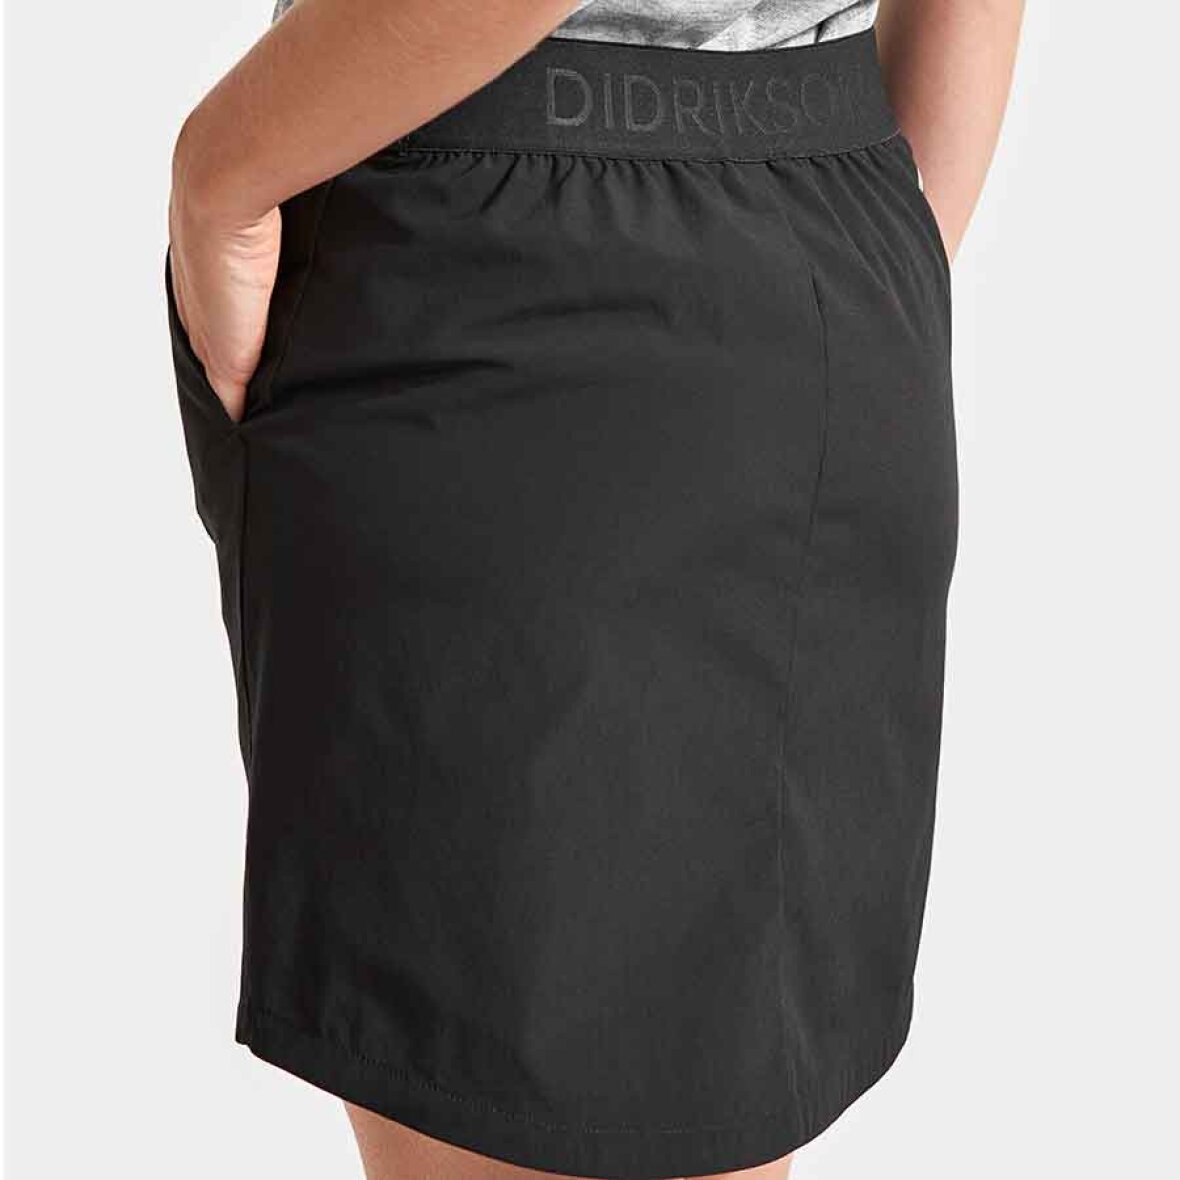 Liv Skirt Didriksons: nederdel. praktisk og Stilfuld her! Se mere